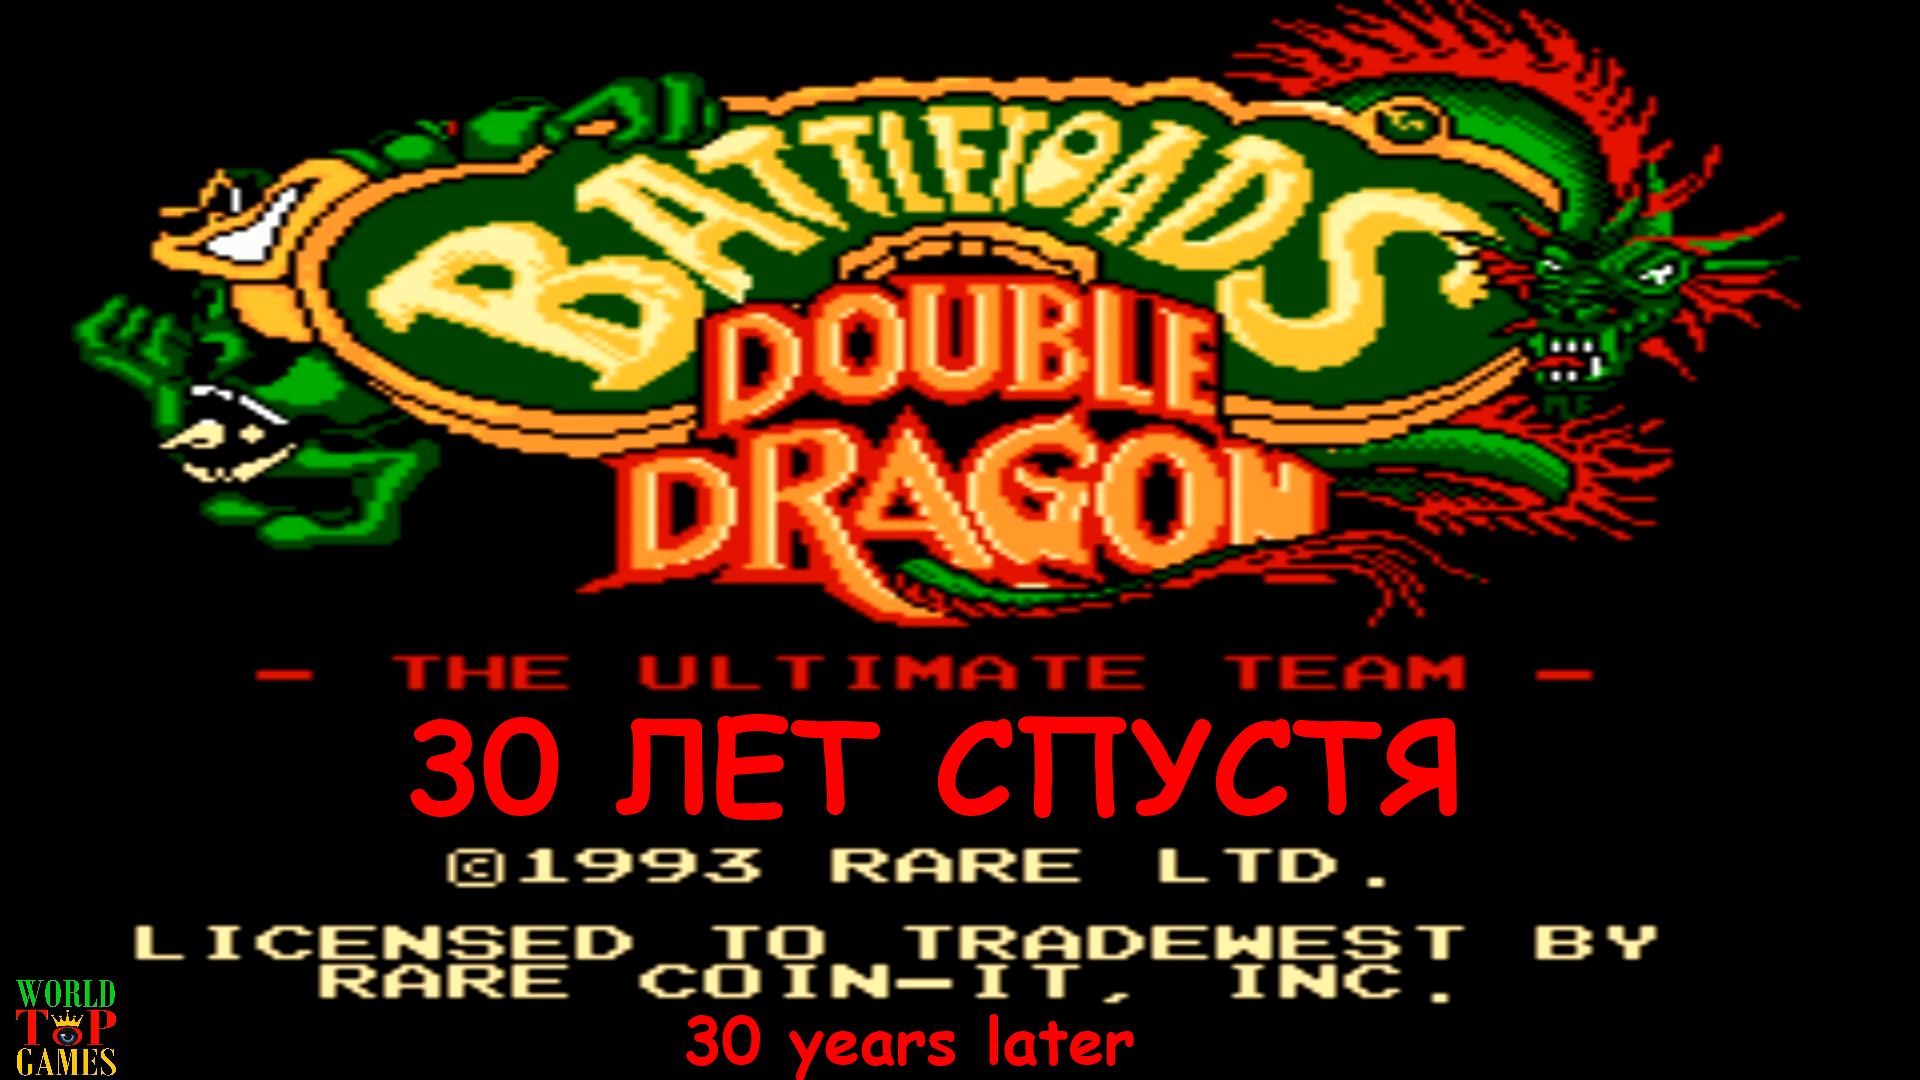 Battletoads 3d. Battletoads Double Dragon Sega. Battletoads and Double Dragon (1993 год, rare). Double Dragon Денди. Battletoads & Double Dragon - the Ultimate Team.